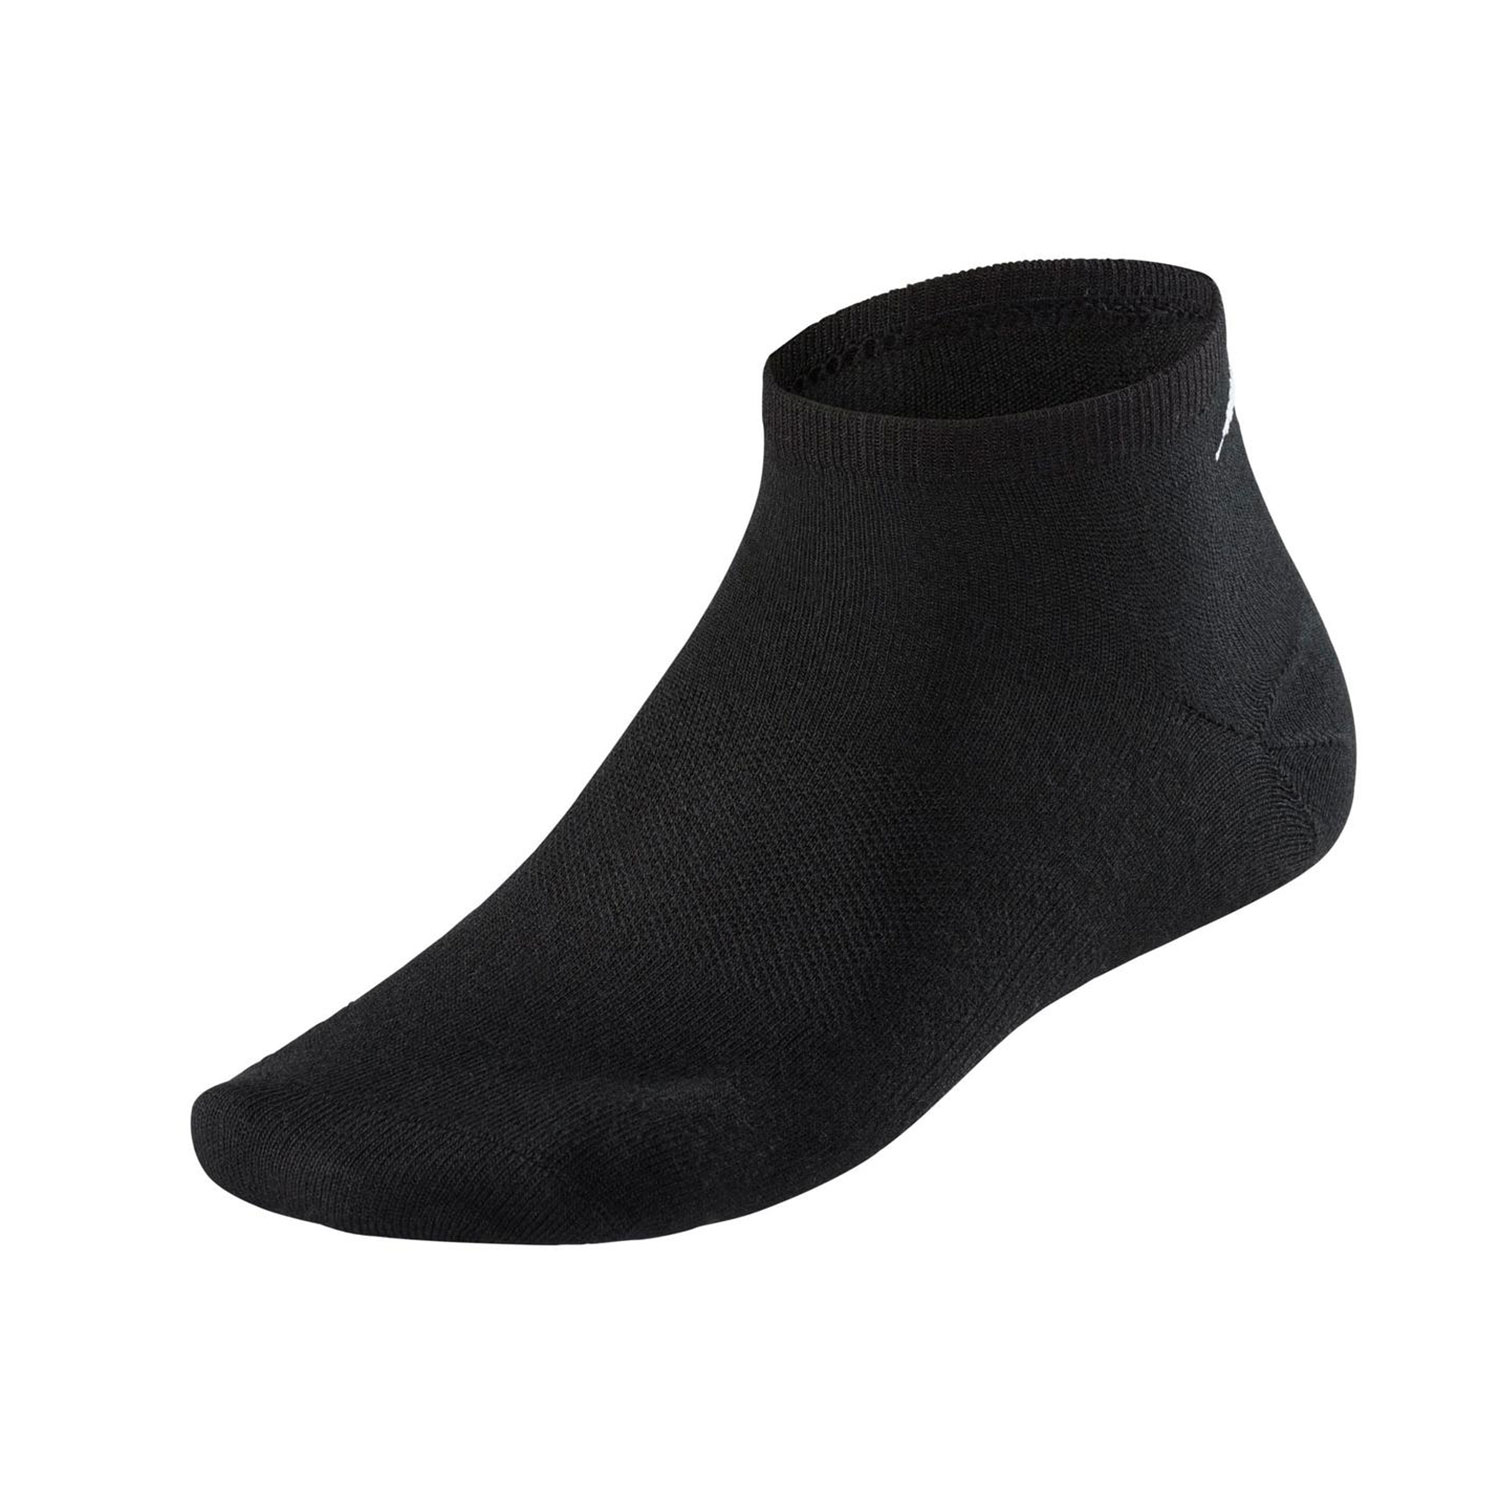 Mizuno DryLite Pro Socks - Black